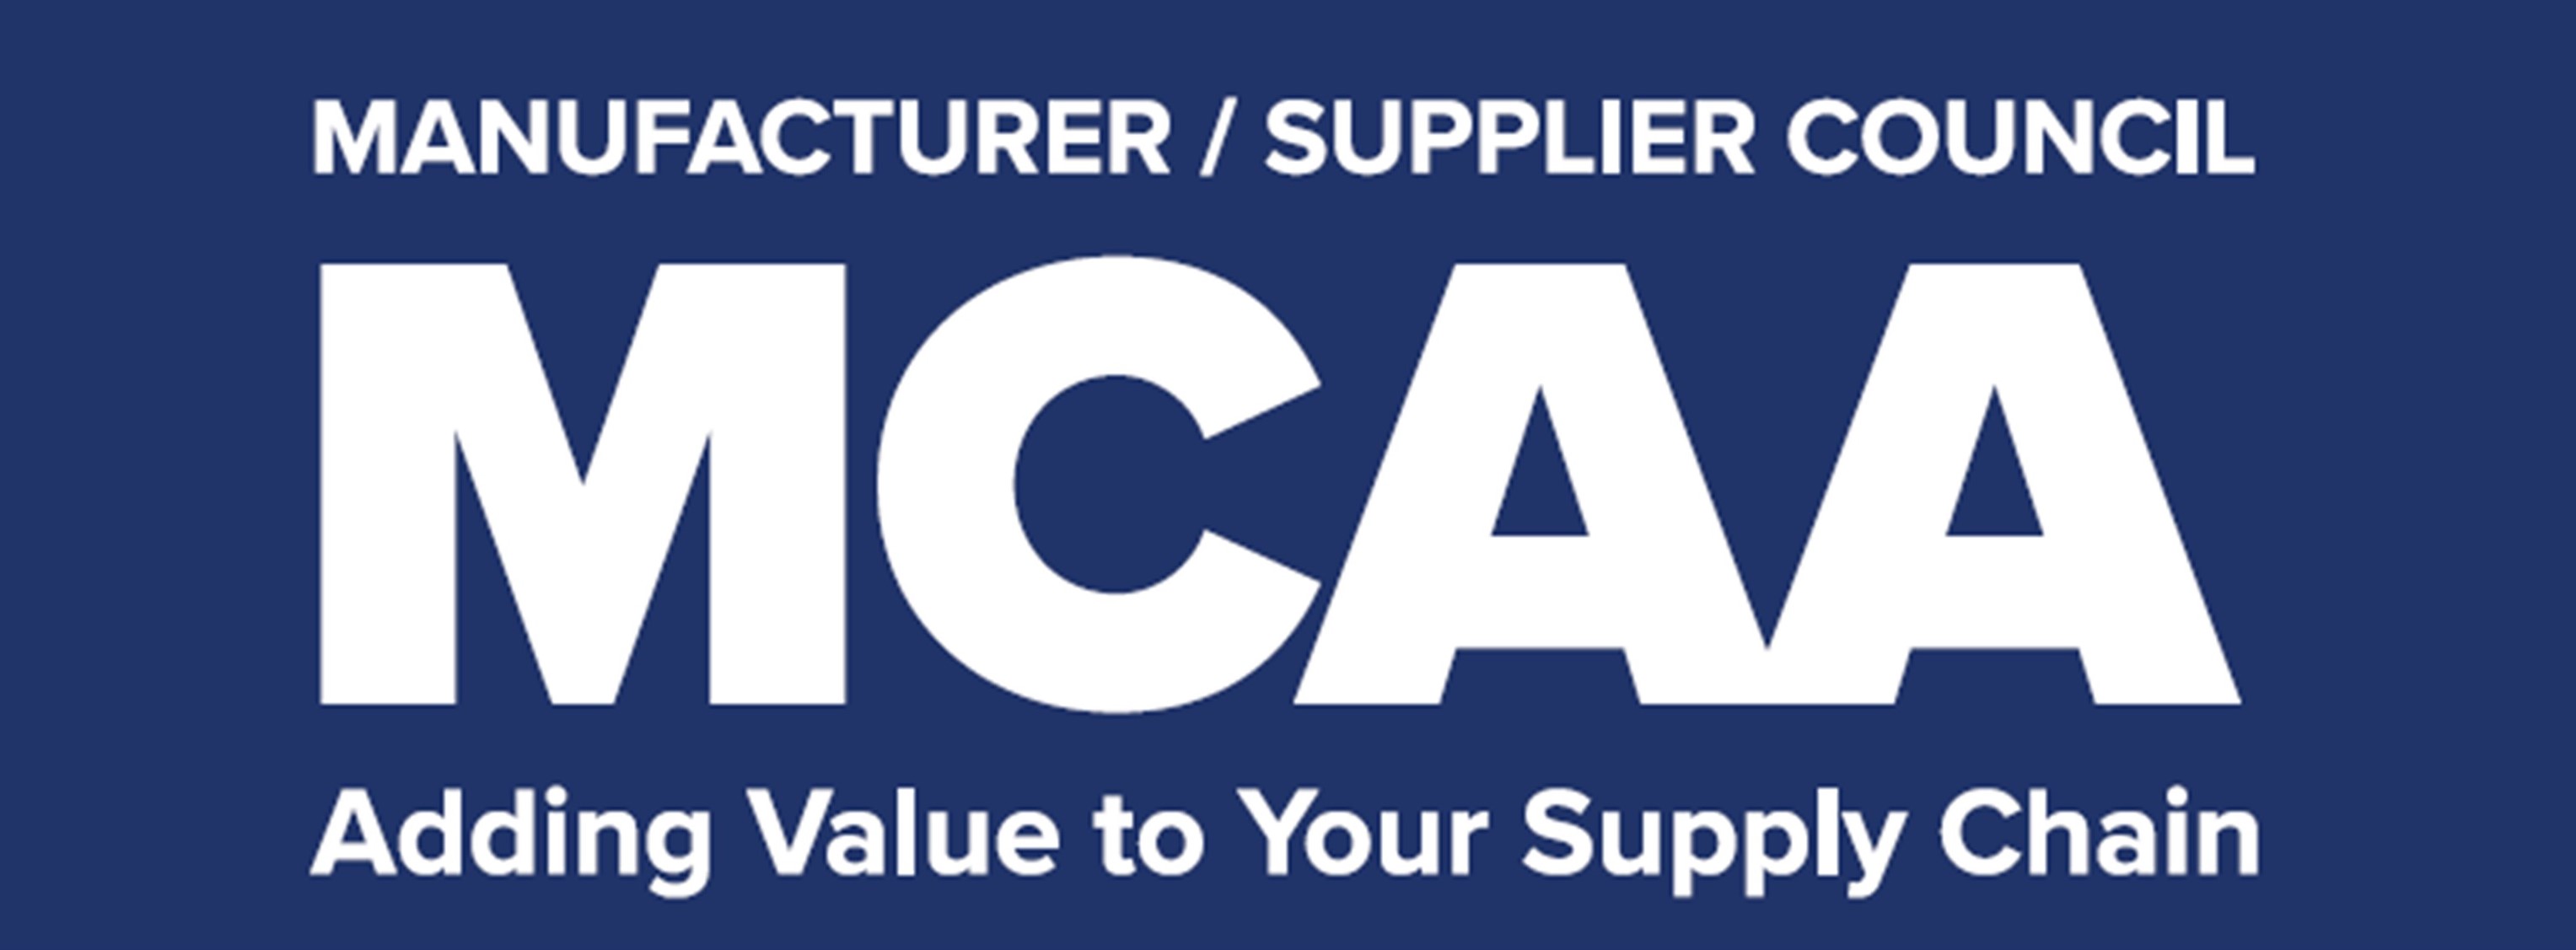 Manufacturer / Supplier Council